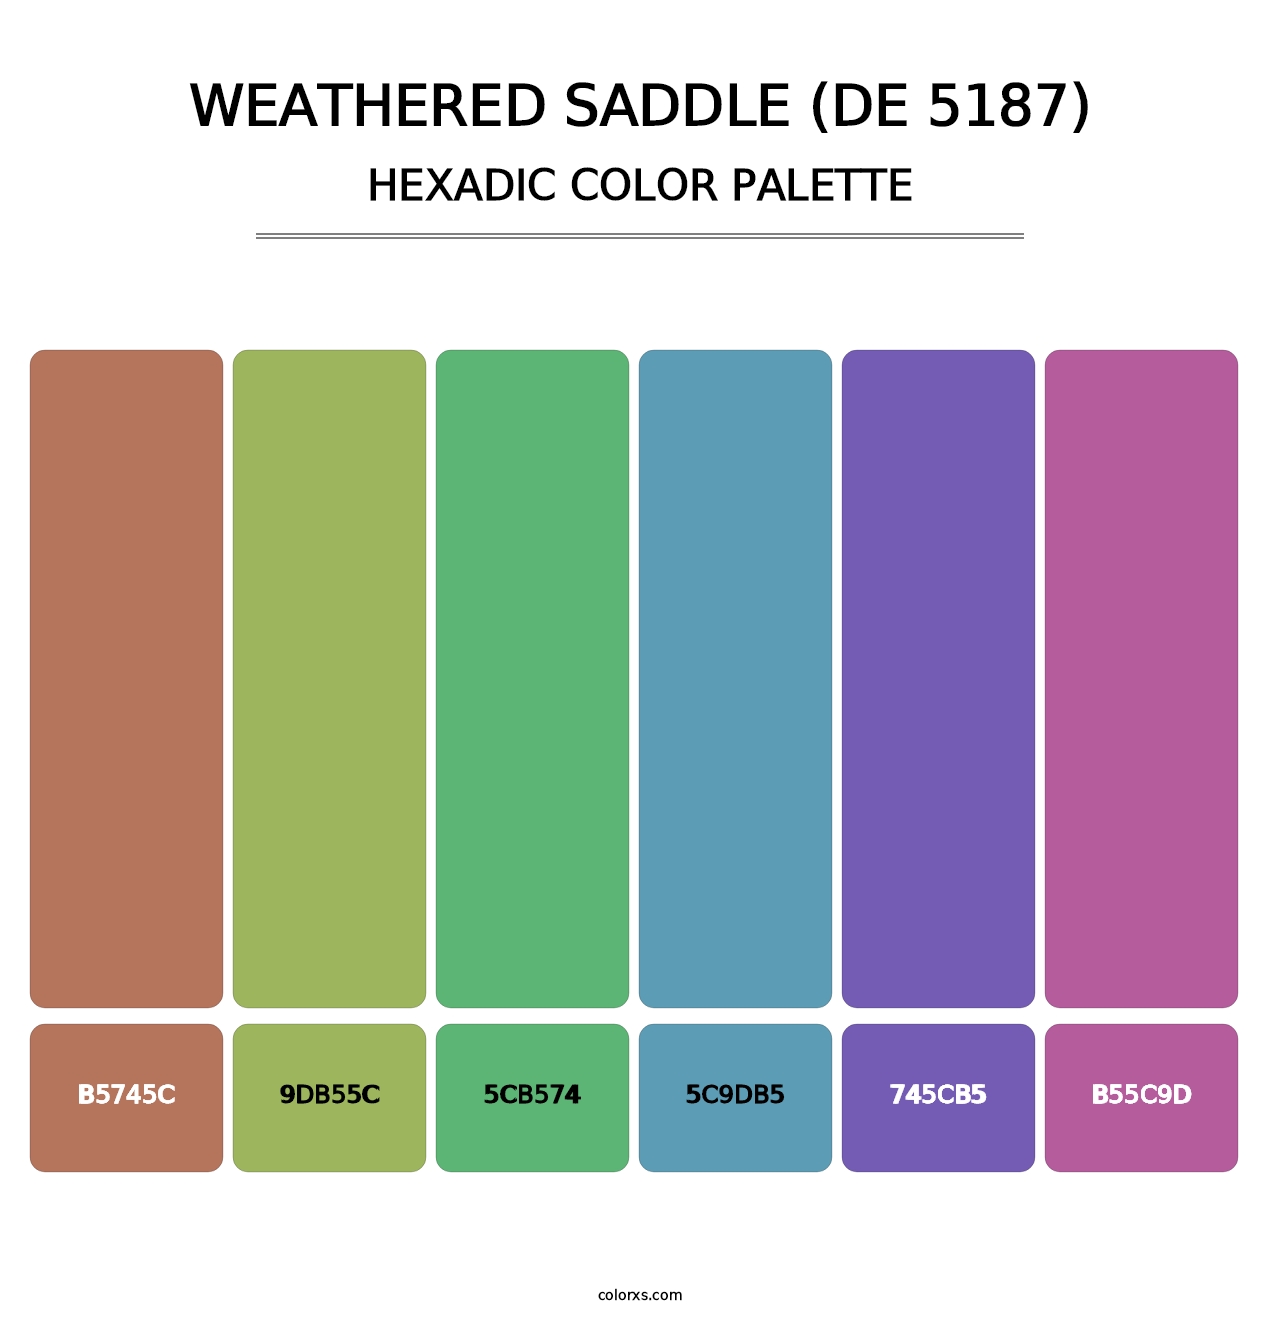 Weathered Saddle (DE 5187) - Hexadic Color Palette